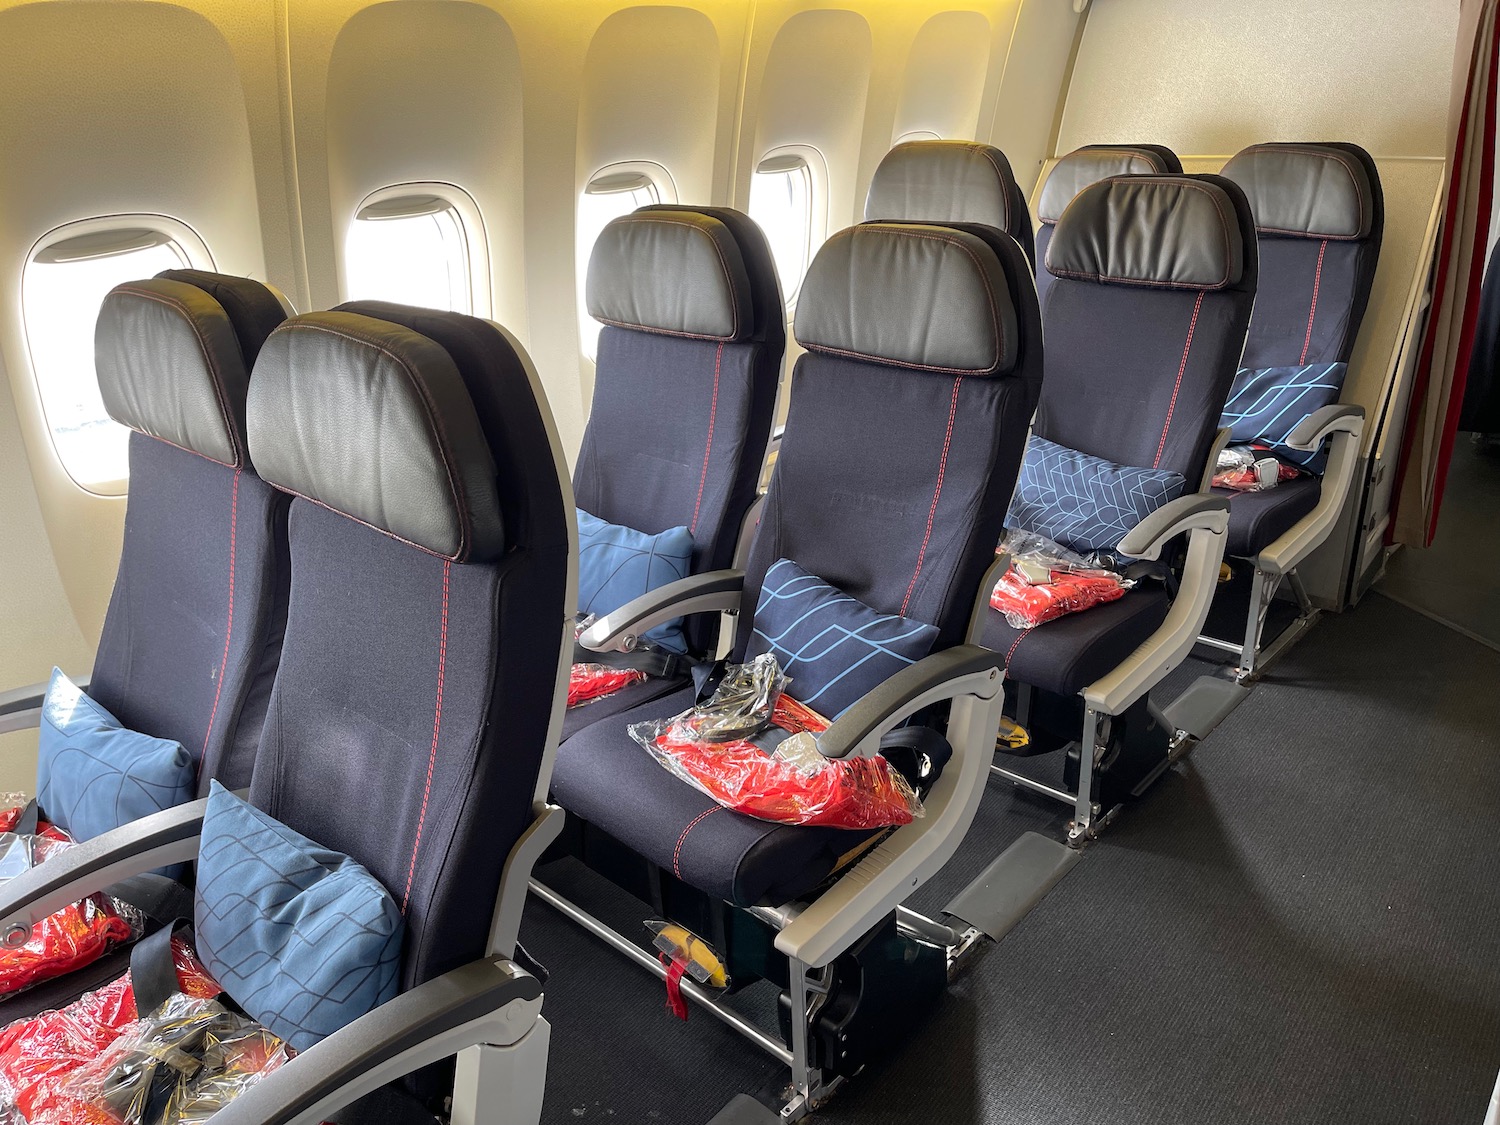 Air France Premium Economy Review